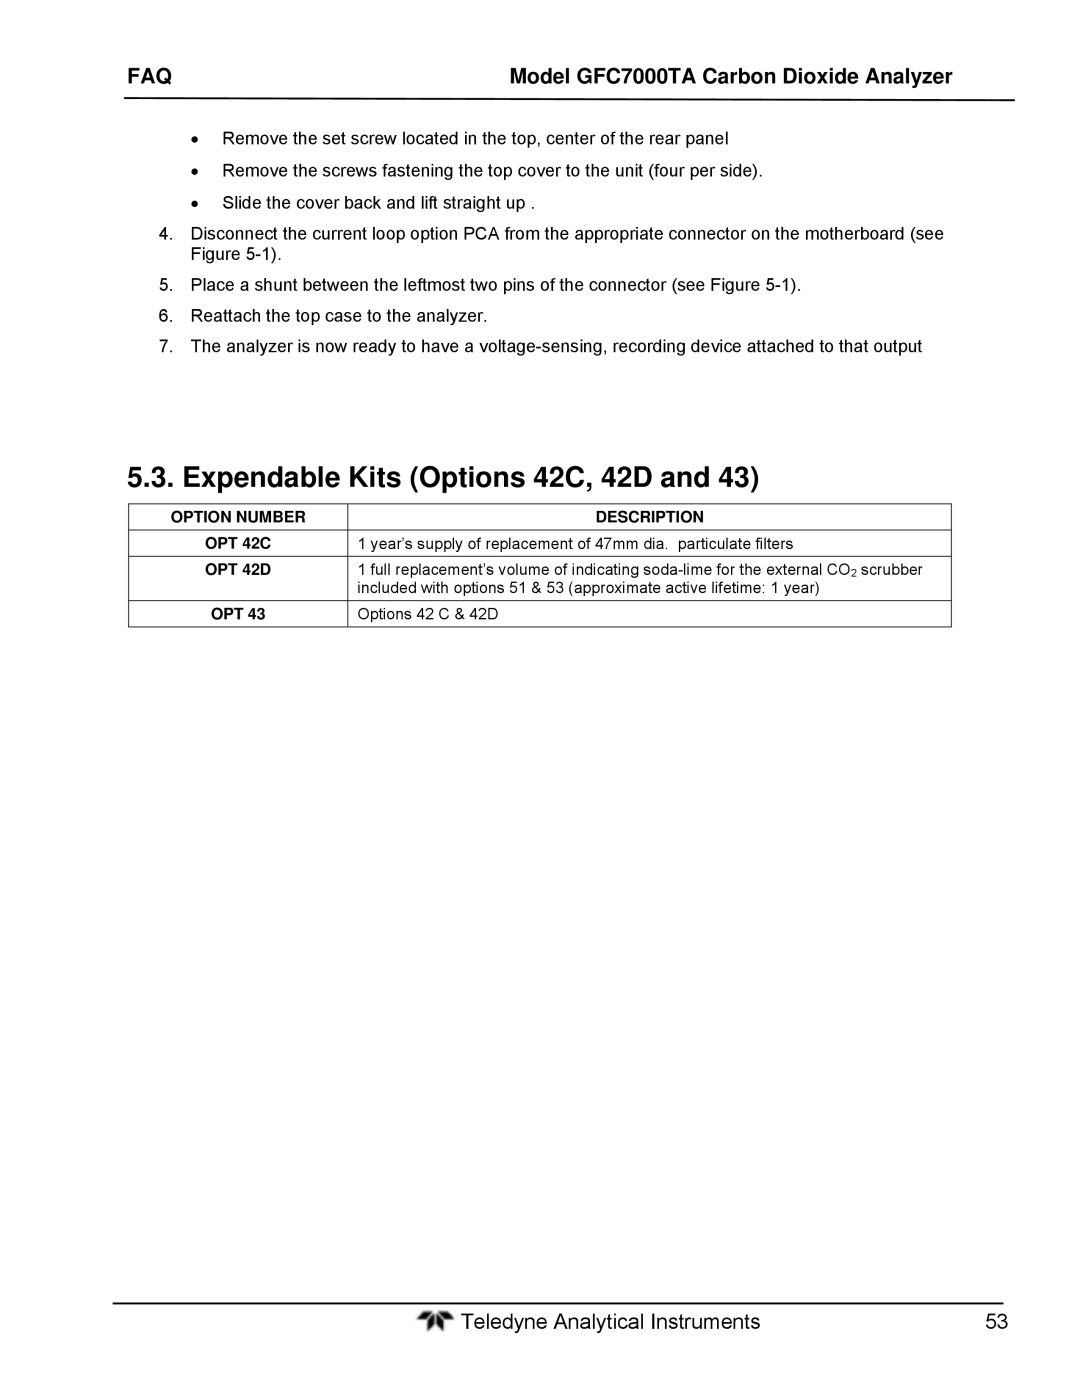 Teledyne gfc 7000ta operation manual Expendable Kits Options 42C, 42D, Option Number Description OPT 42C, OPT 42D 